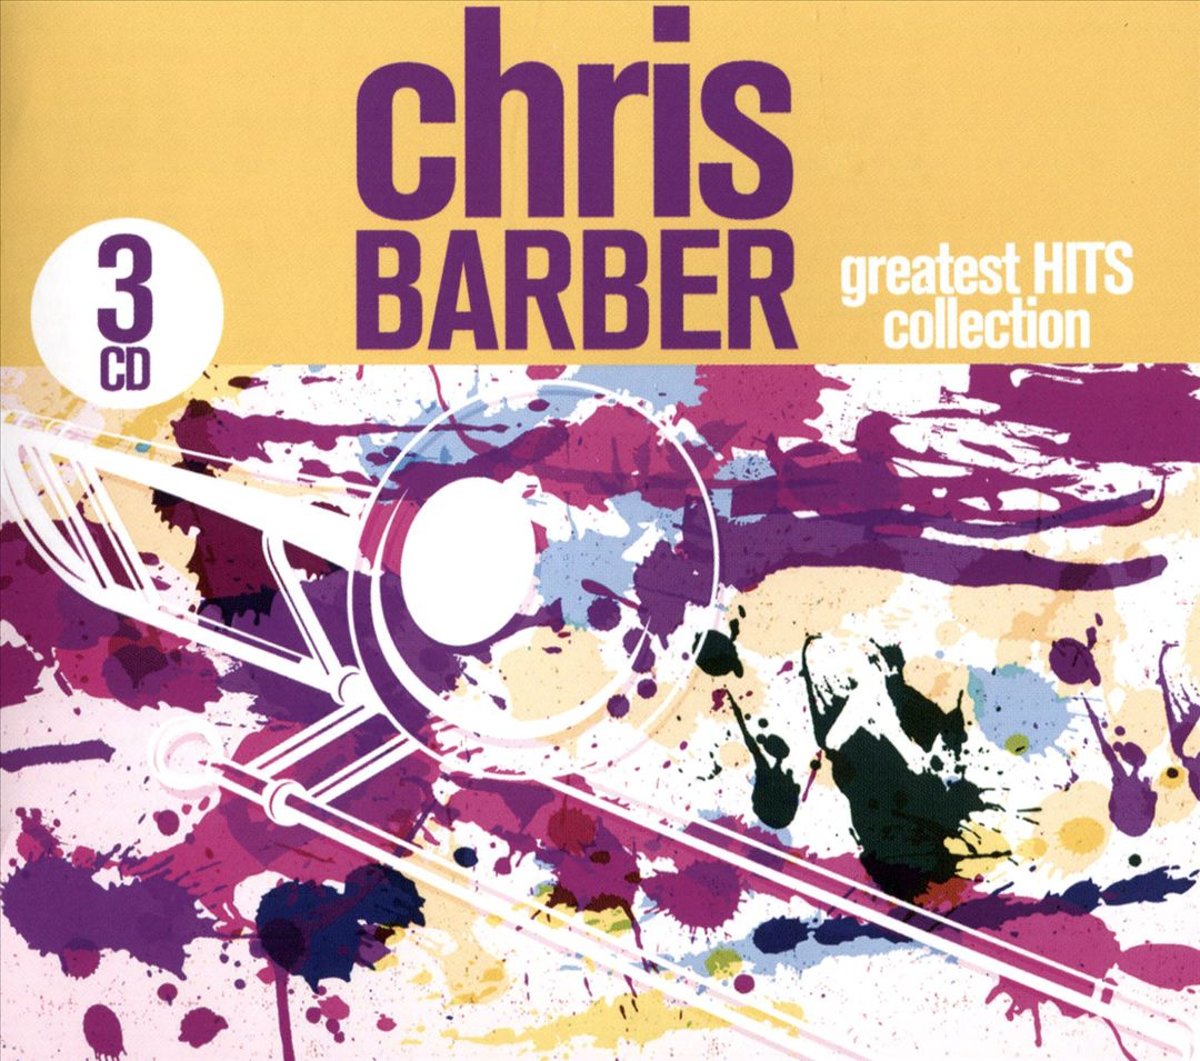 Chris Barber. Chris Barber обложки дисков. Greatest hits collection